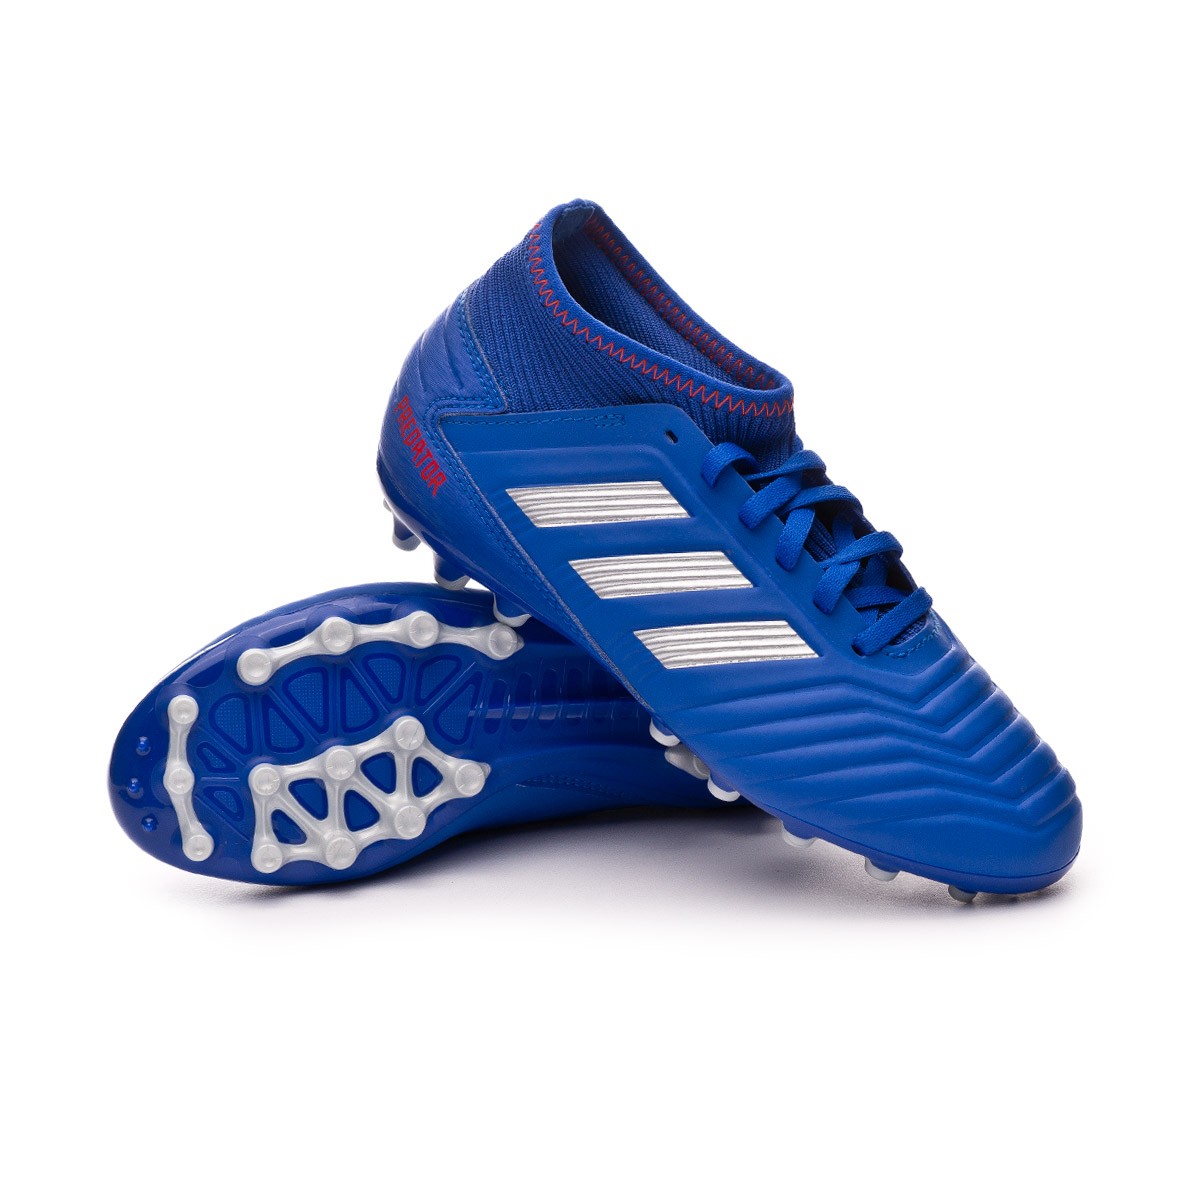 Bota de fútbol adidas Predator 19.3 AG Niño Bold blue-Silver  metallic-Active red - Tienda de fútbol Fútbol Emotion